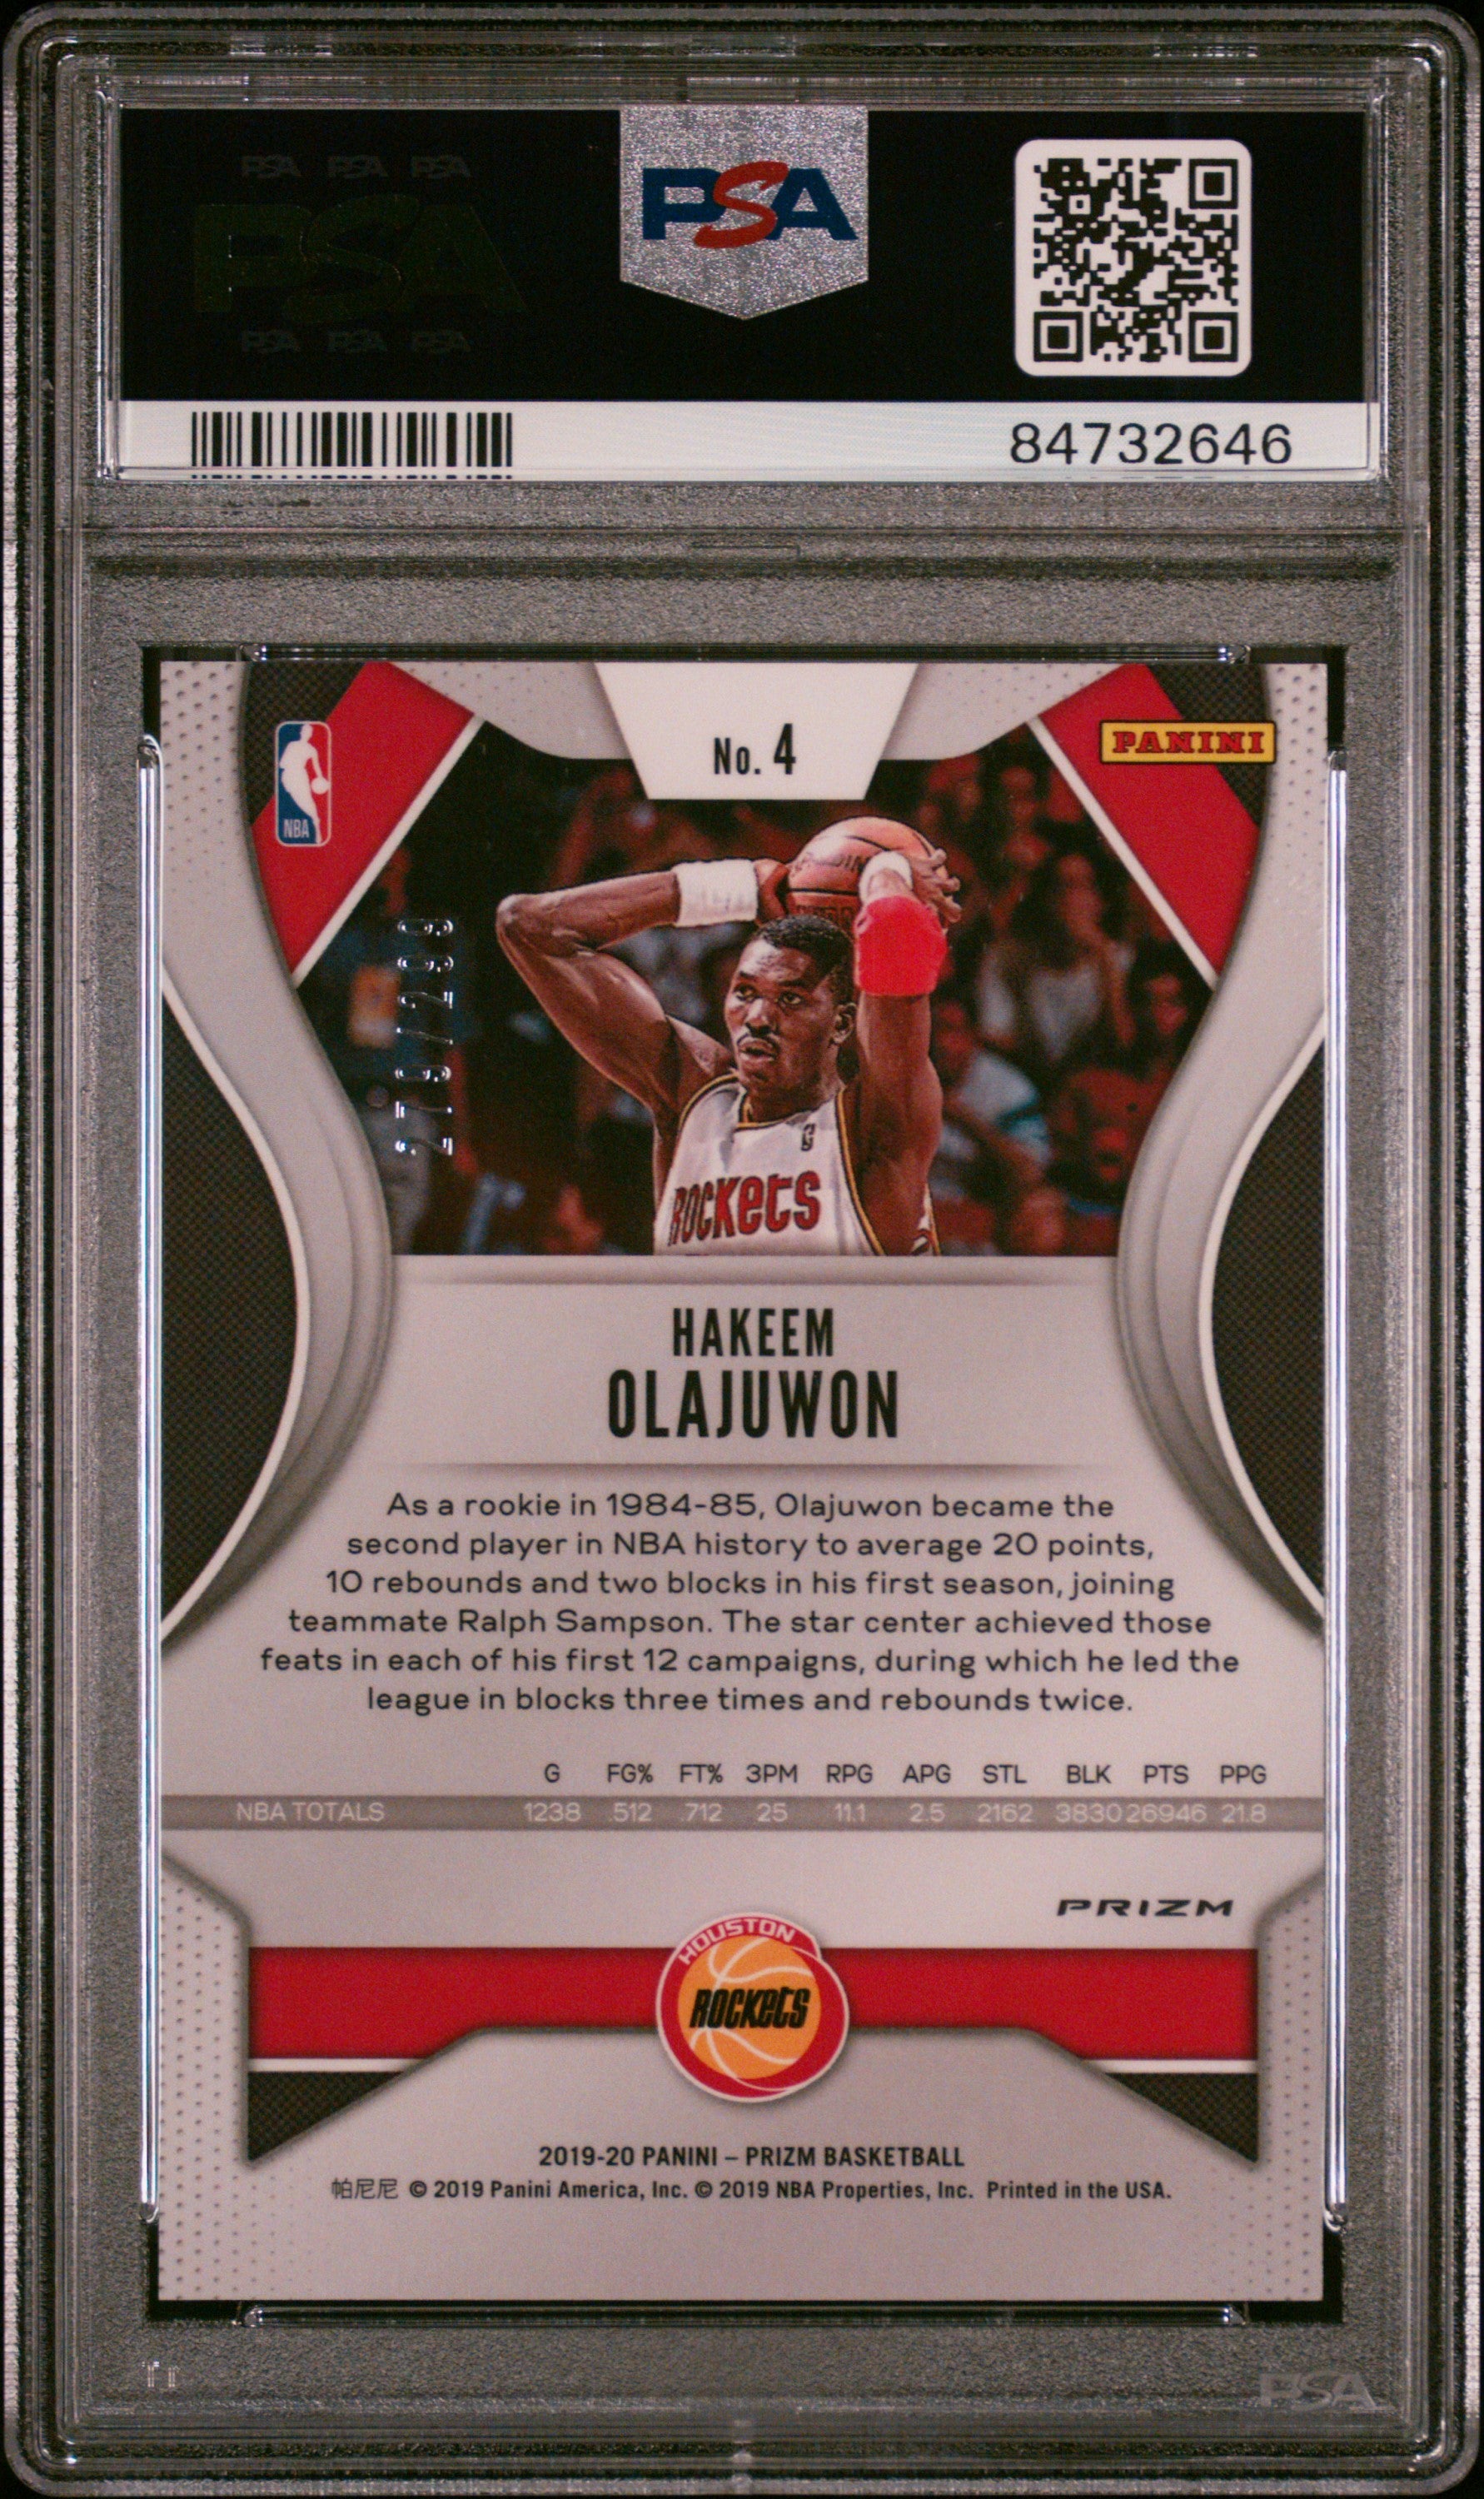 Hakeem Olajuwon 2019 Panini Prizm Red Basketball Card #4 Graded PSA 9 279/299-Powers Sports Memorabilia